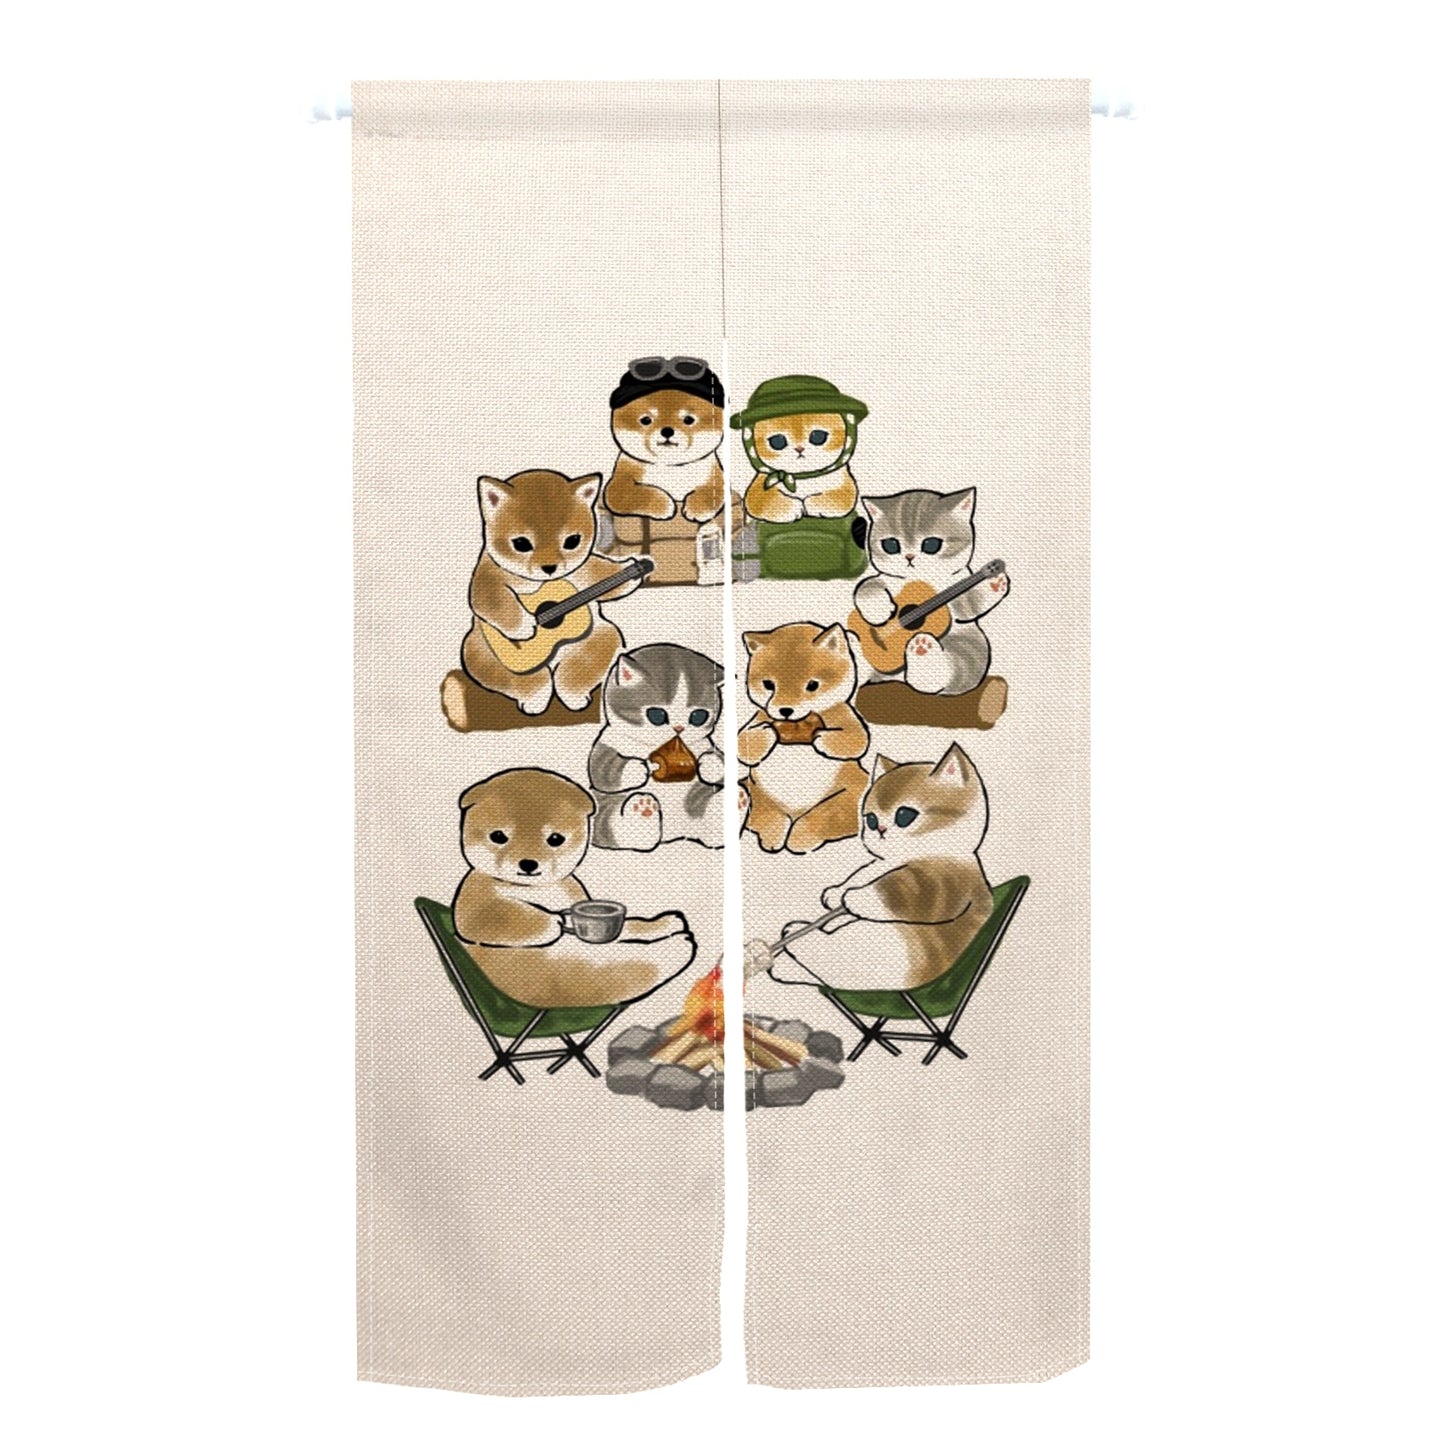 Japanese Style Cat Door Curtain